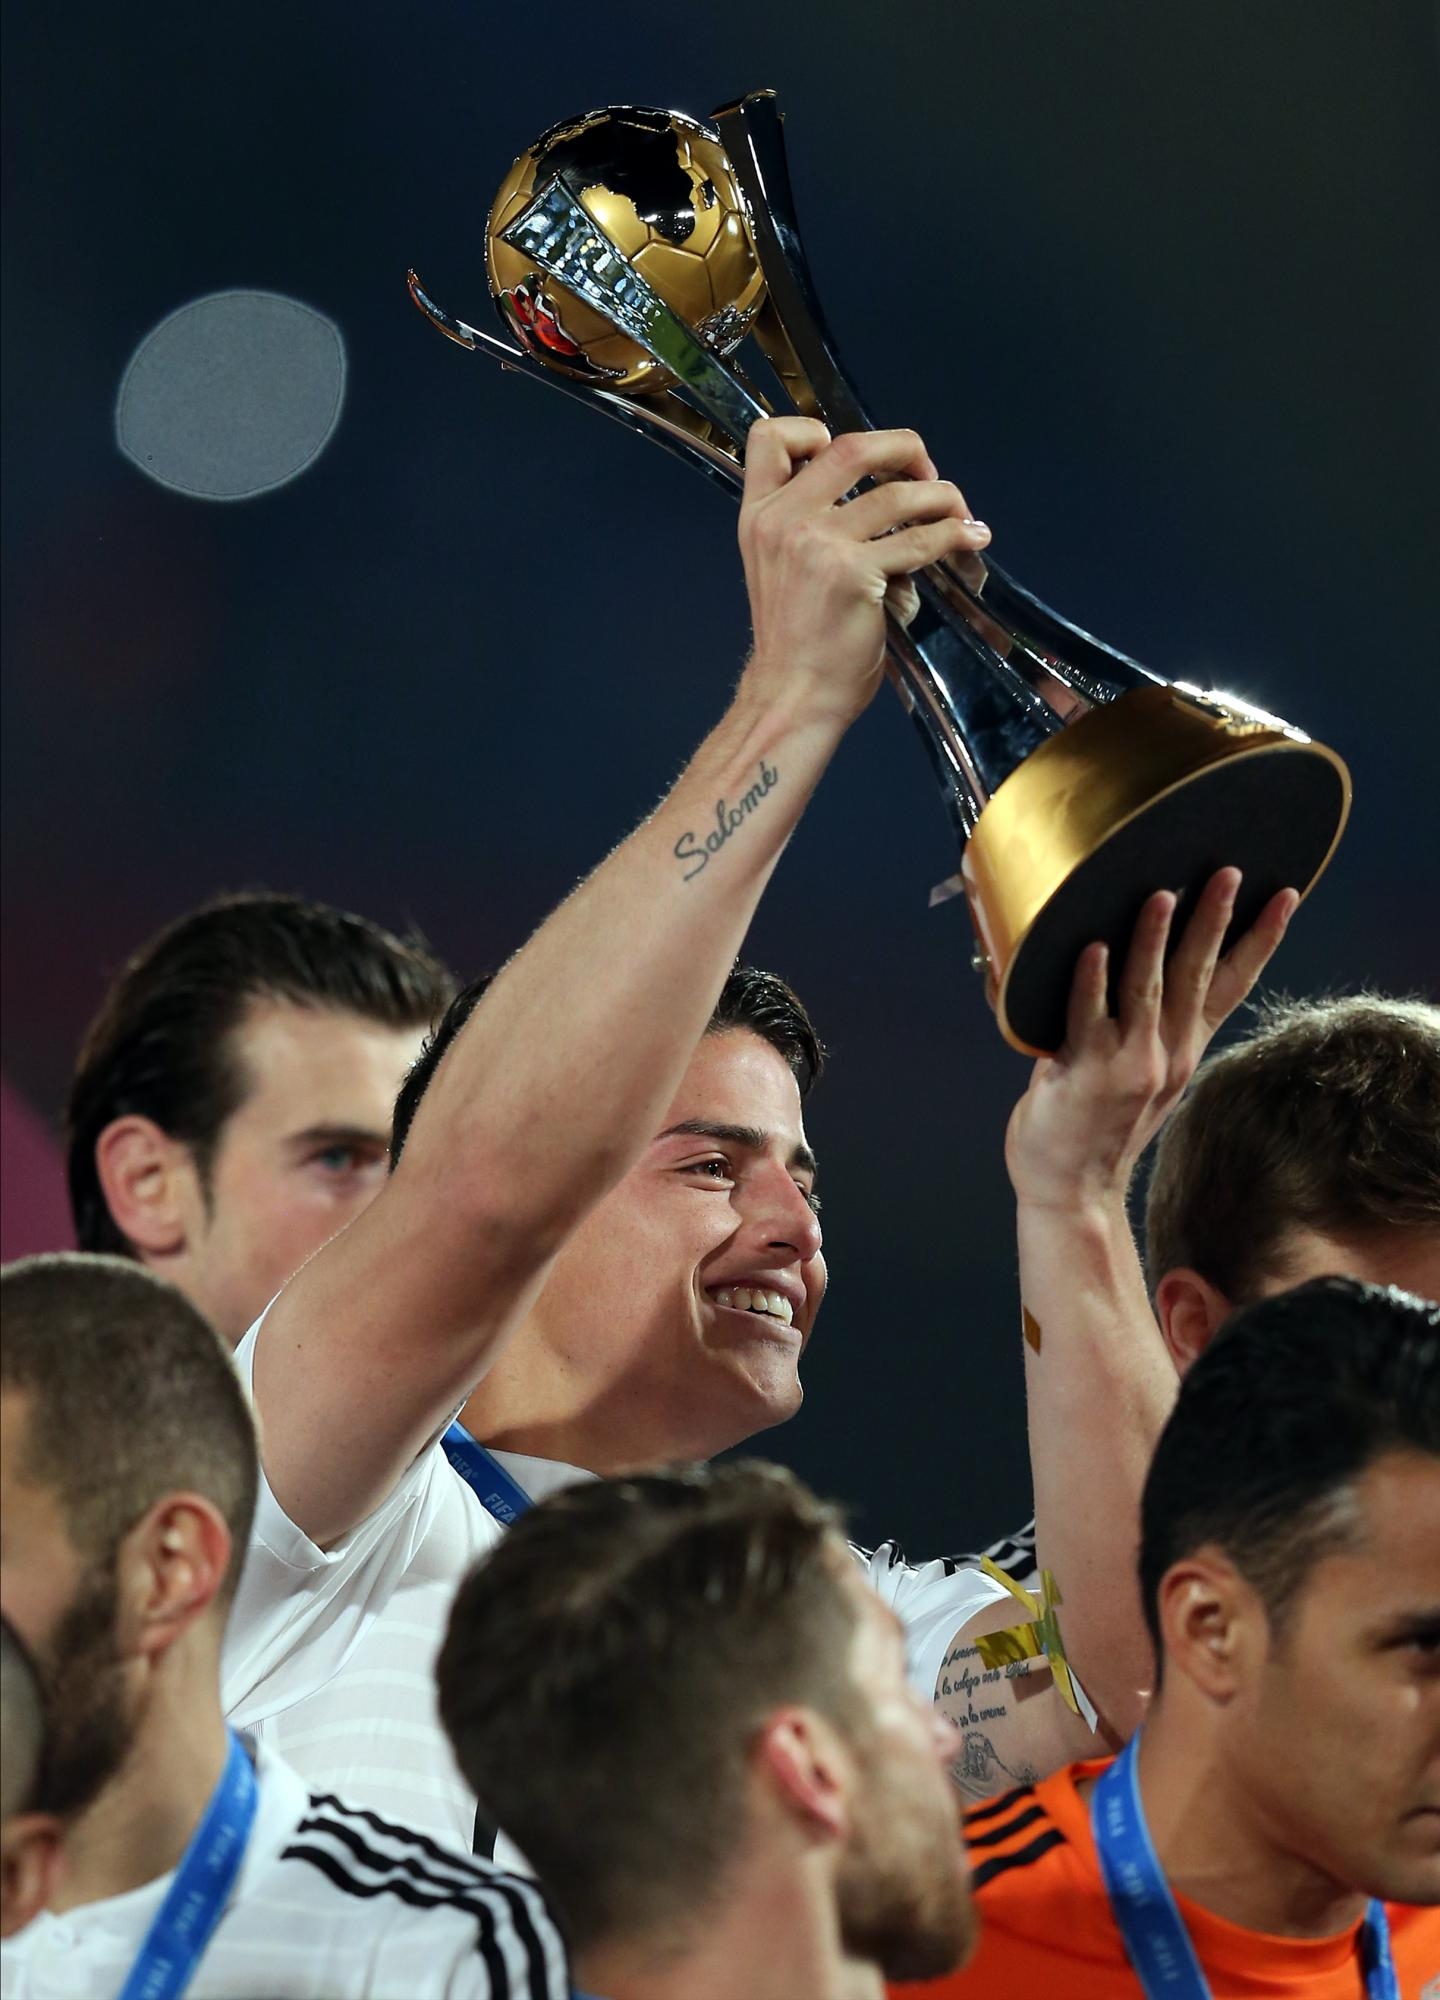 Футбол кубок 2011. Хамес Родригес с Кубком. Хамес Родригес трофей см 2014.